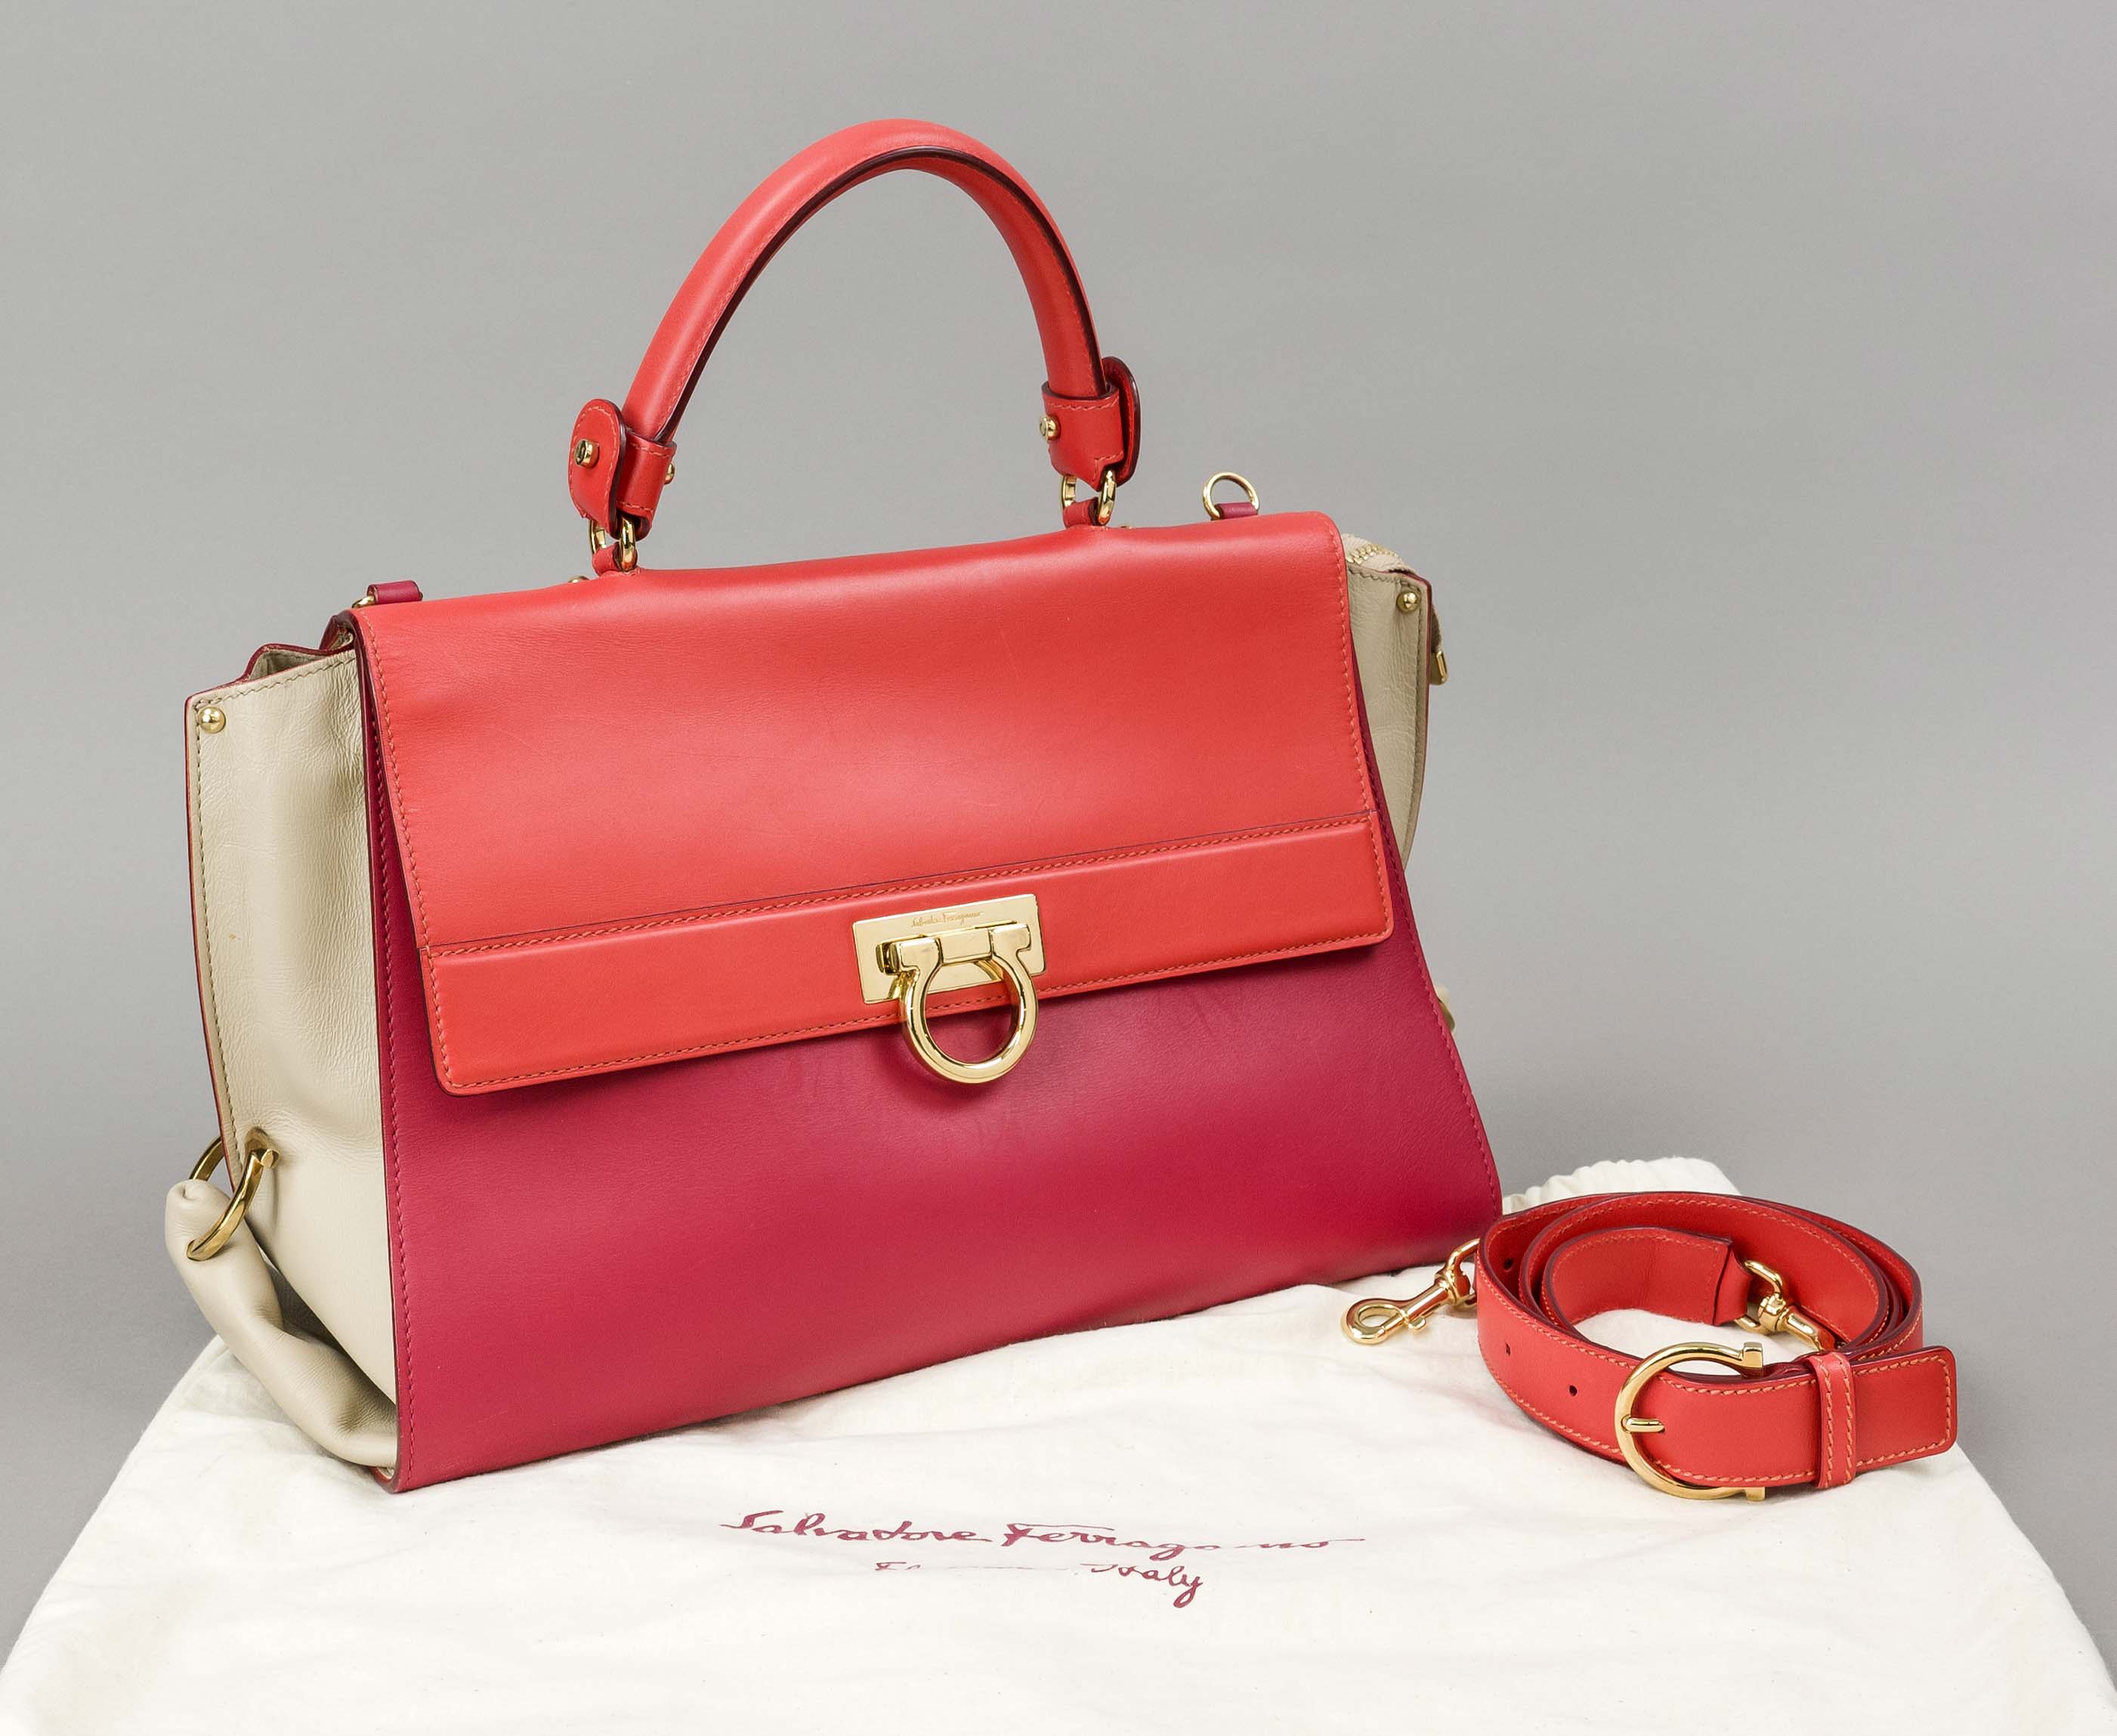 Salvatore Ferragamo, Multicolor Leather Sofia Top Handle Bag, orange-red, burgundy and sand-